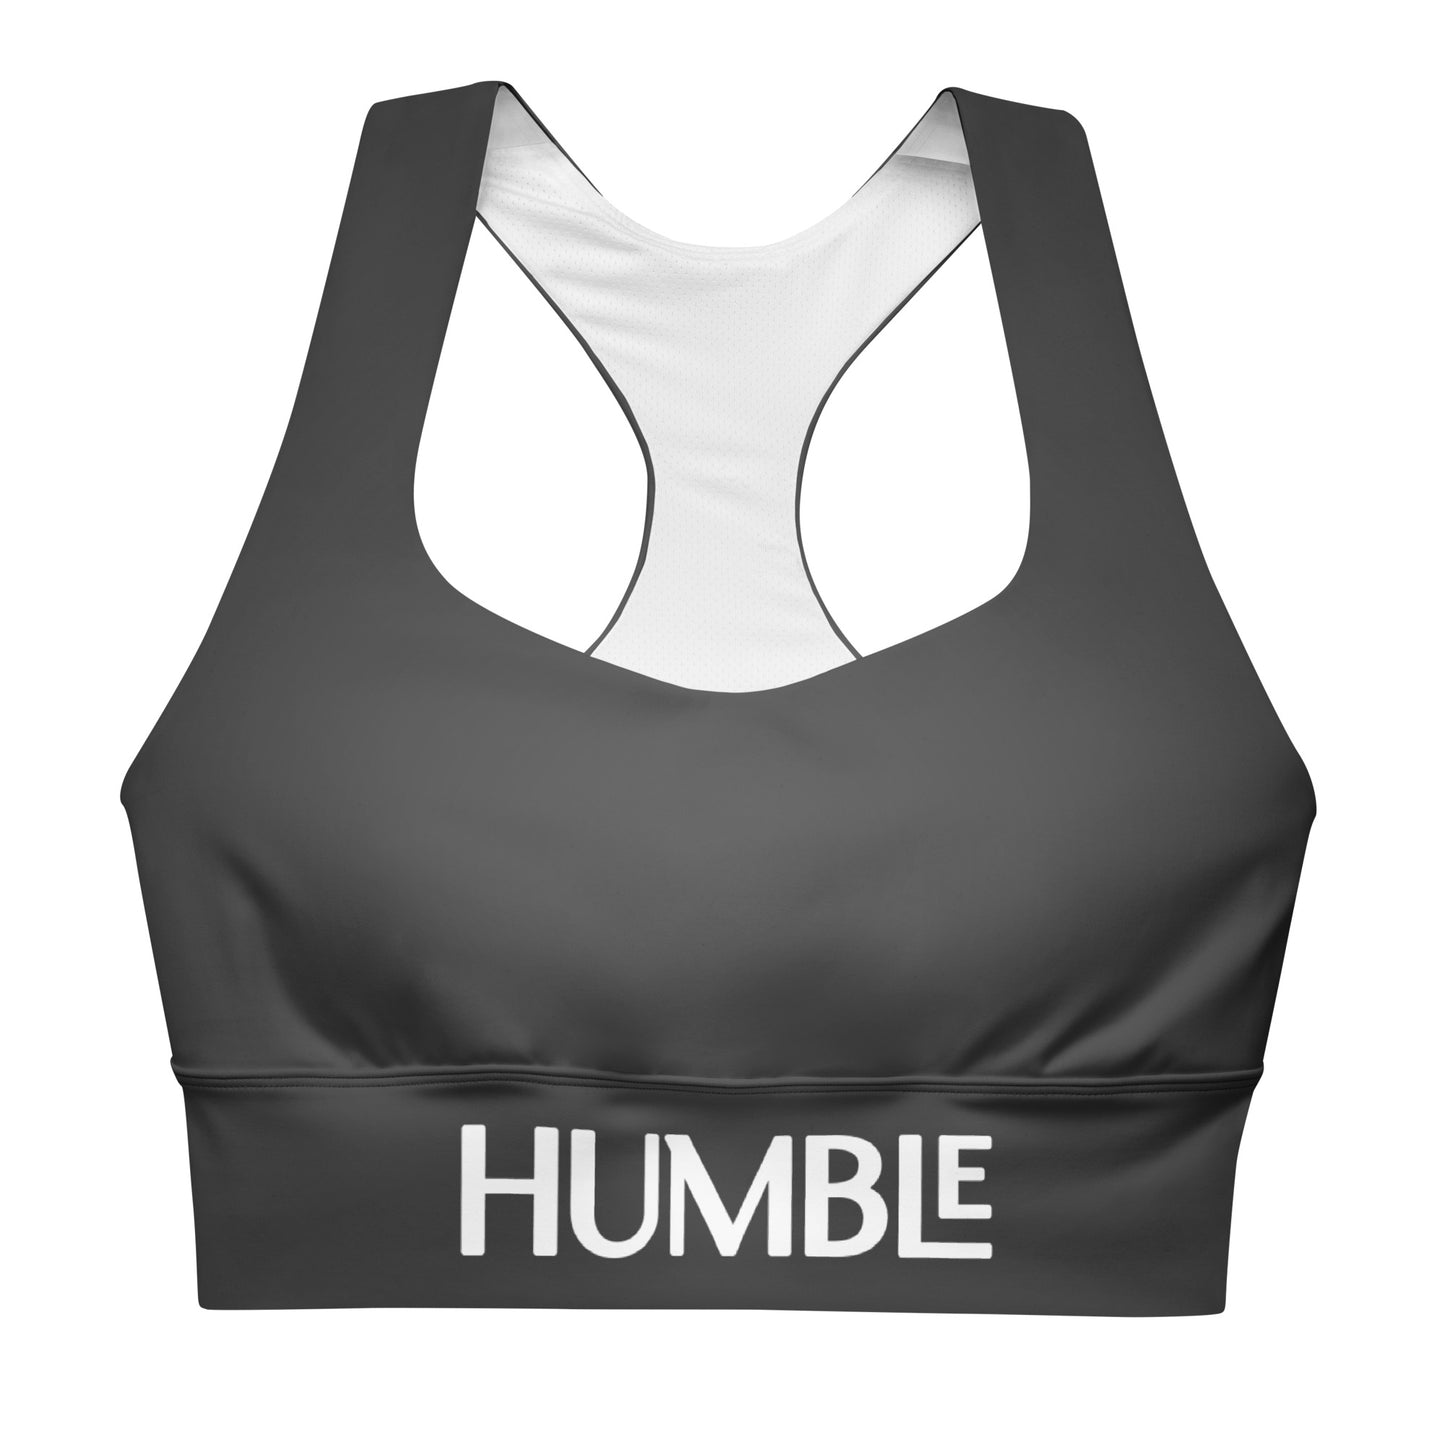 Humble Sportswear, women’s sports bras, women’s active tops, women’s activewear tops